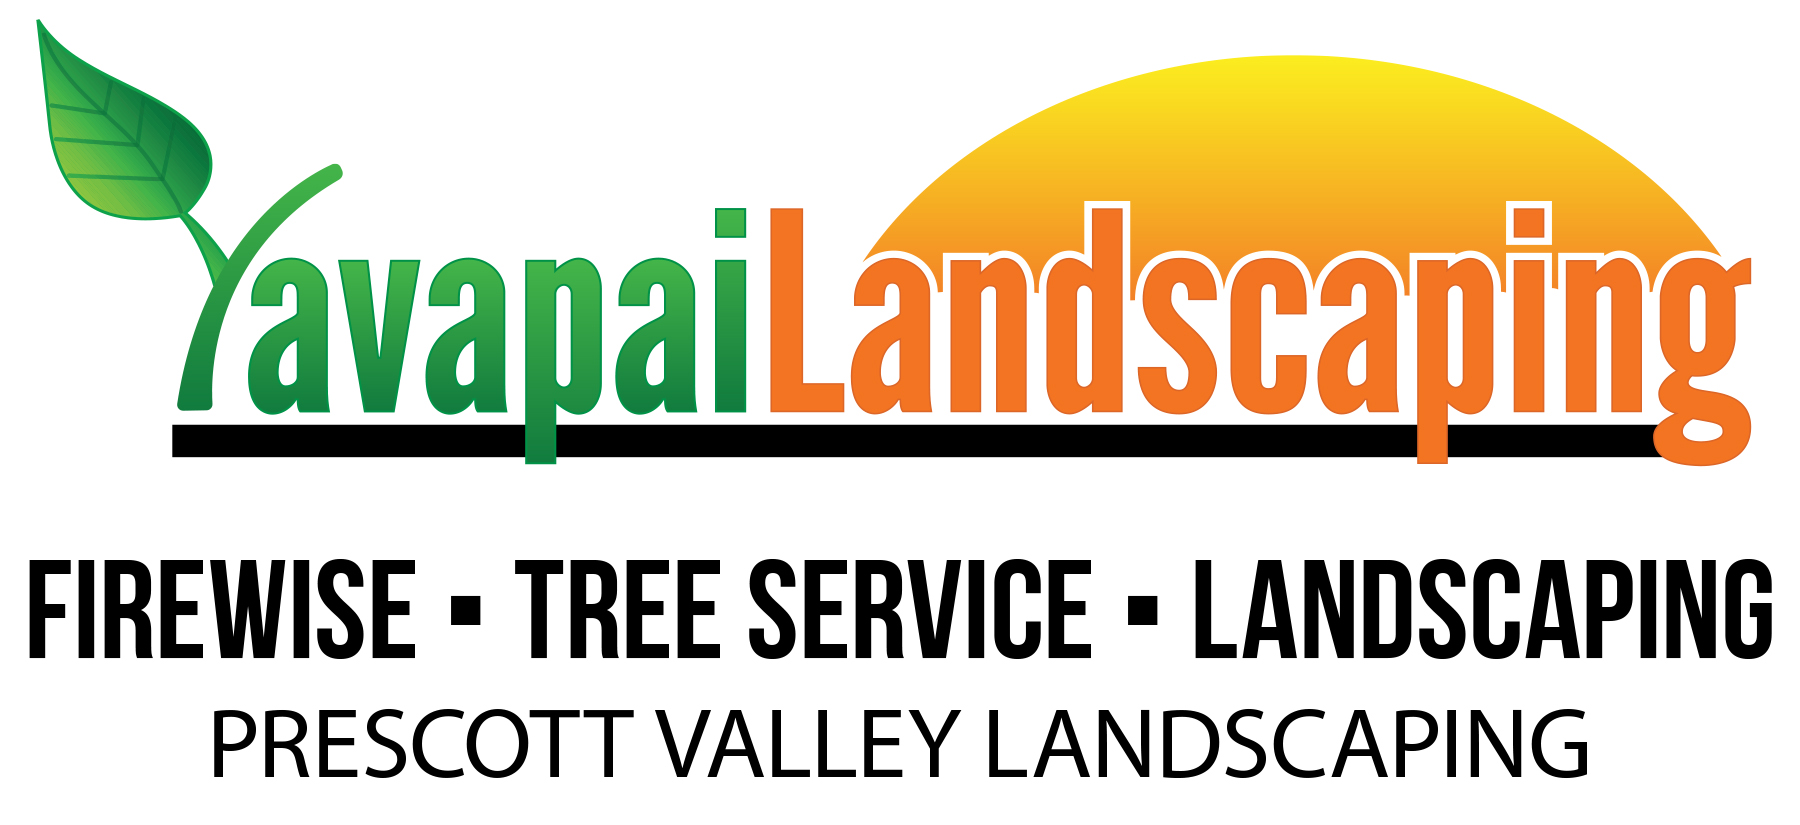 prescott-valley-landscaping-professionals.jpg